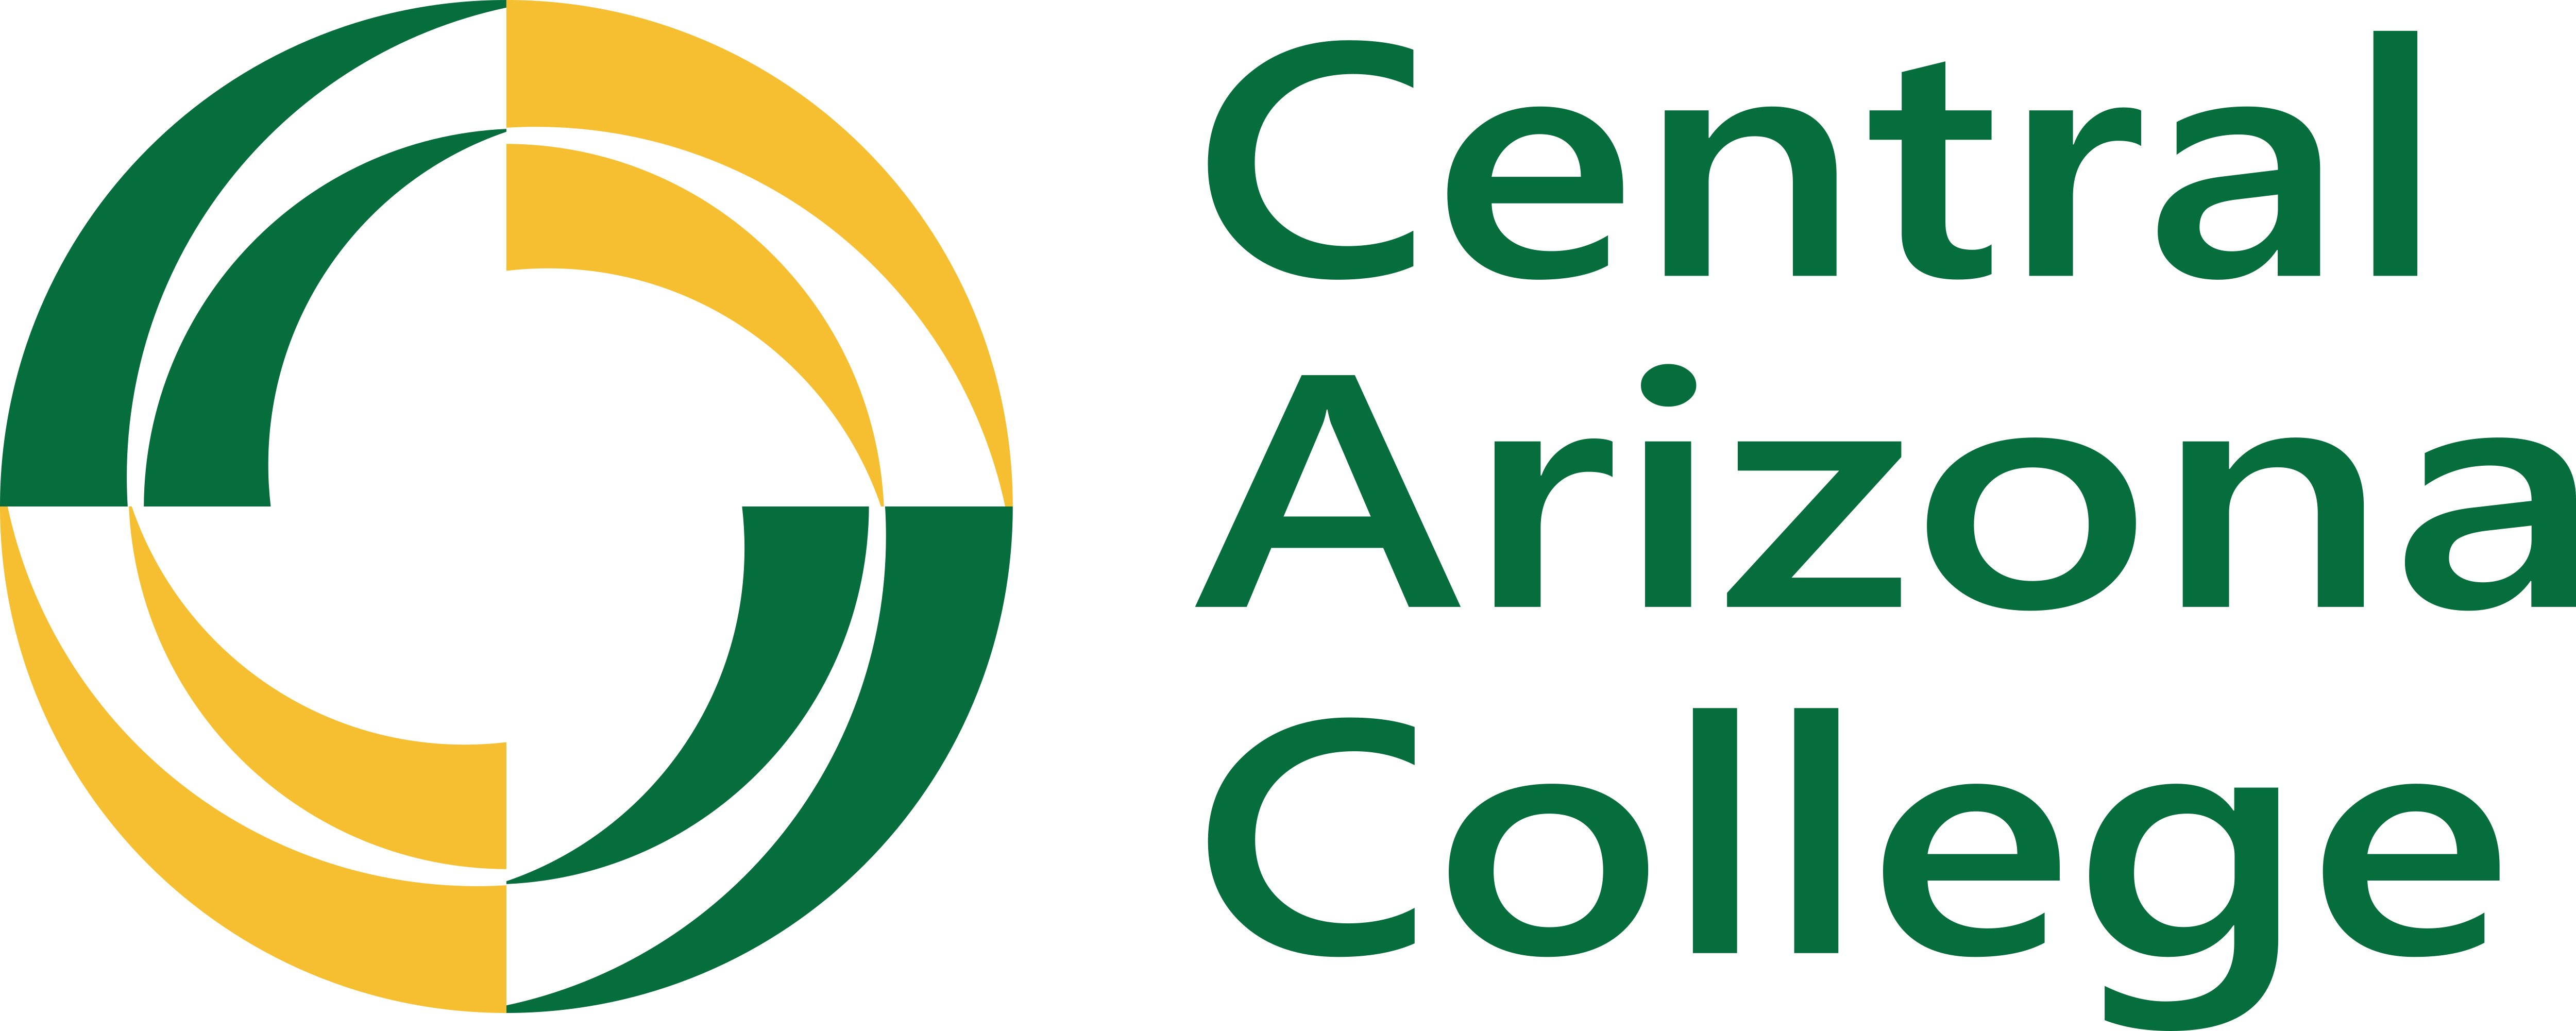 central-arizona-college-logos-download